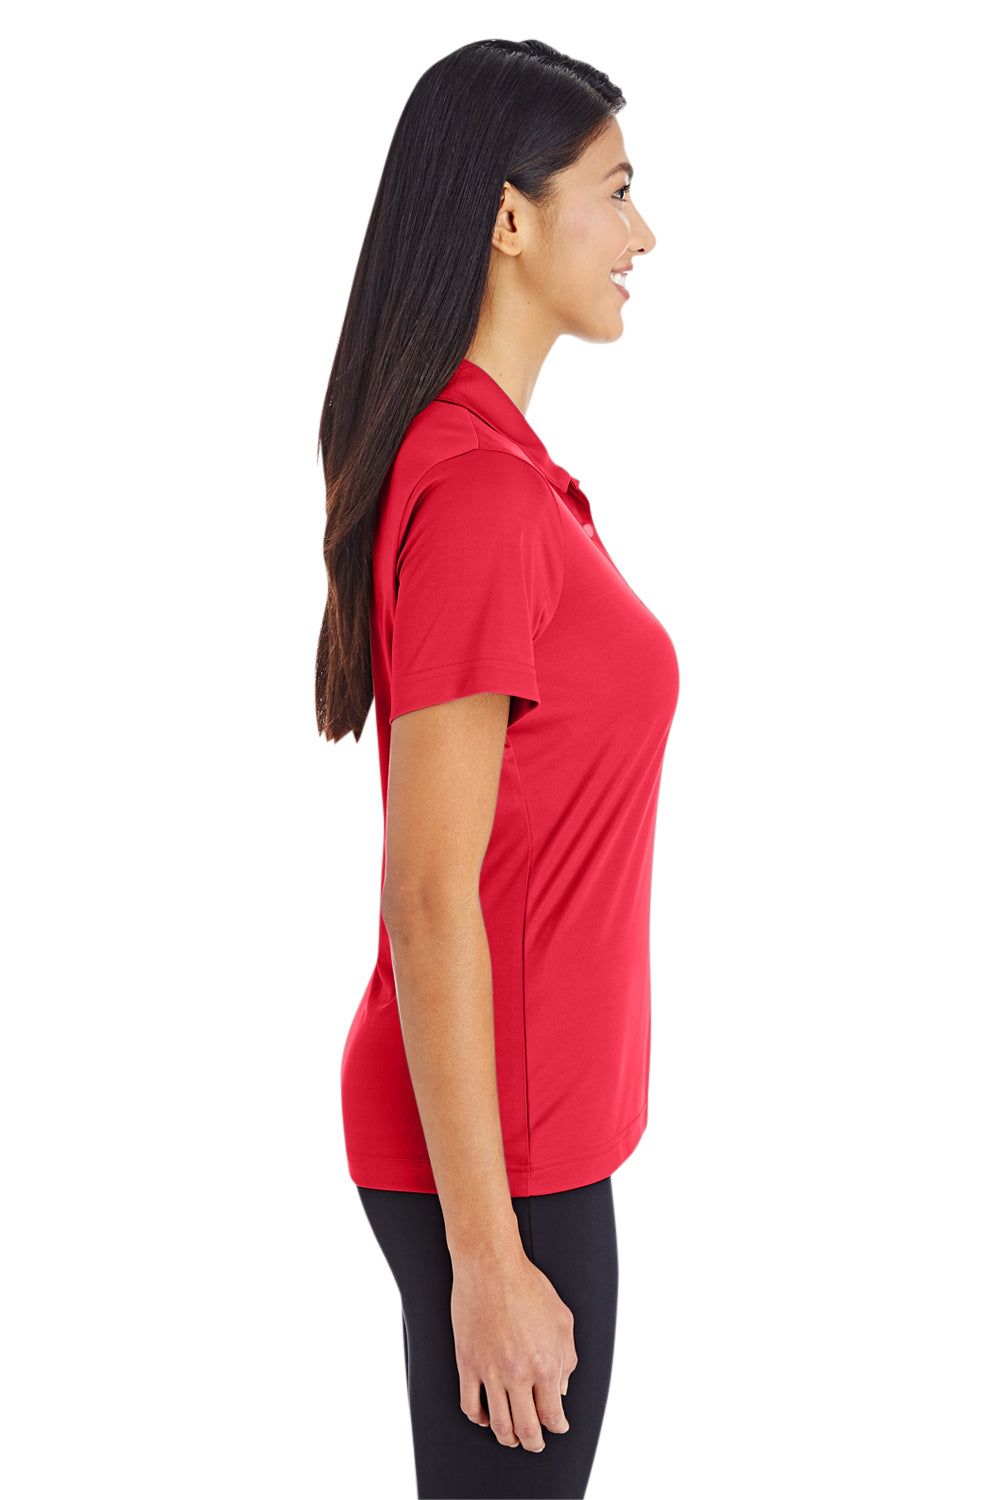 Team 365 TT51W Womens Zone Performance Moisture Wicking Short Sleeve Polo Shirt Red Side